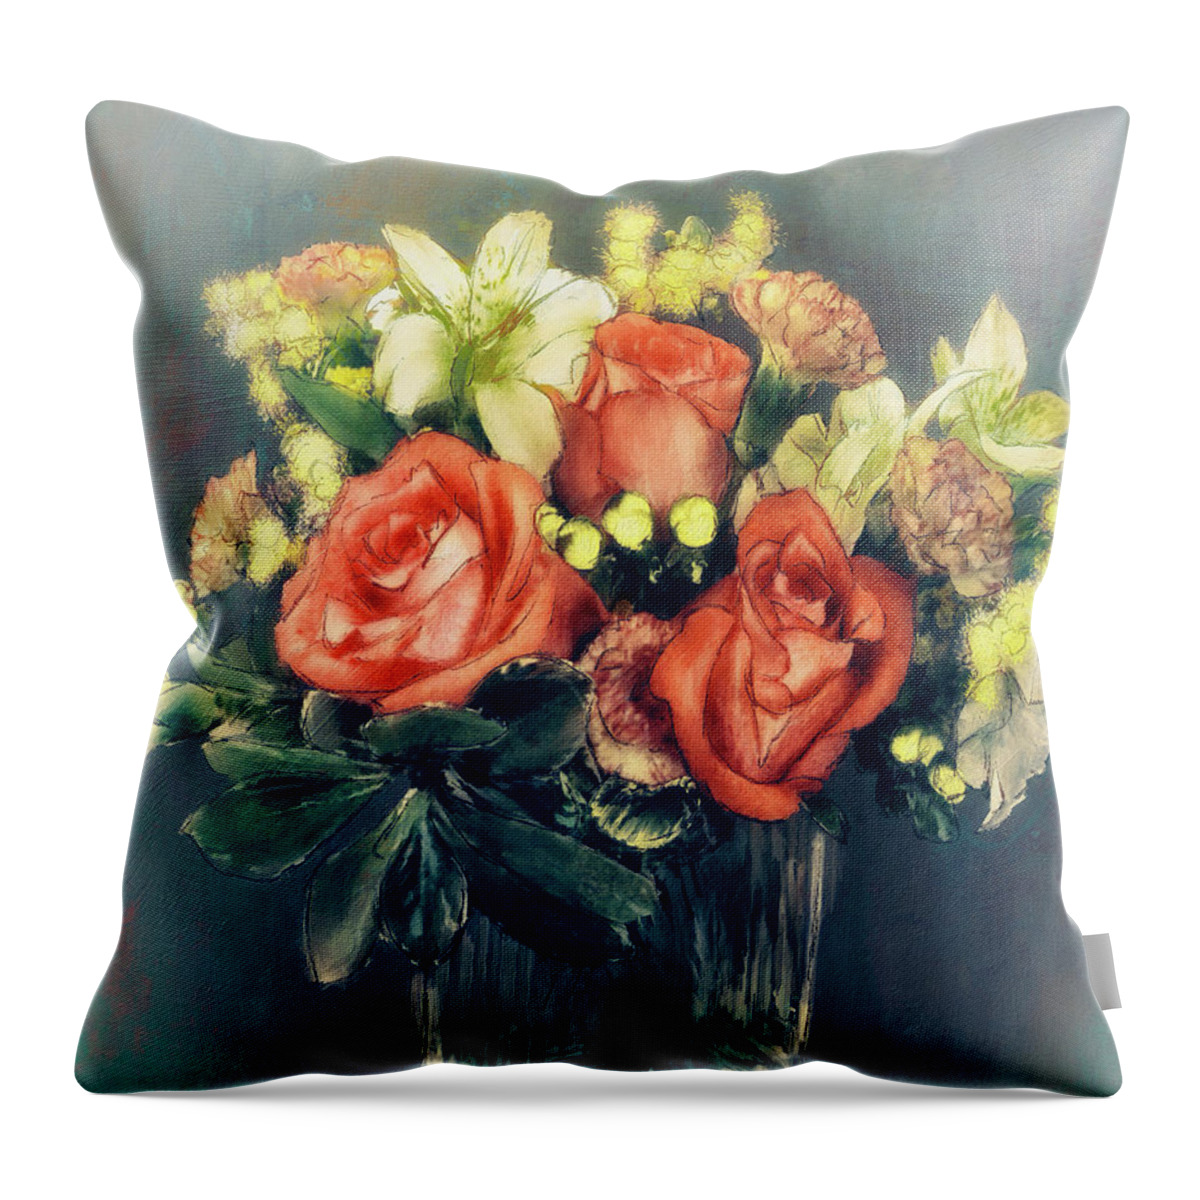 Flower Throw Pillow featuring the digital art Old World Bouquet by Lois Bryan